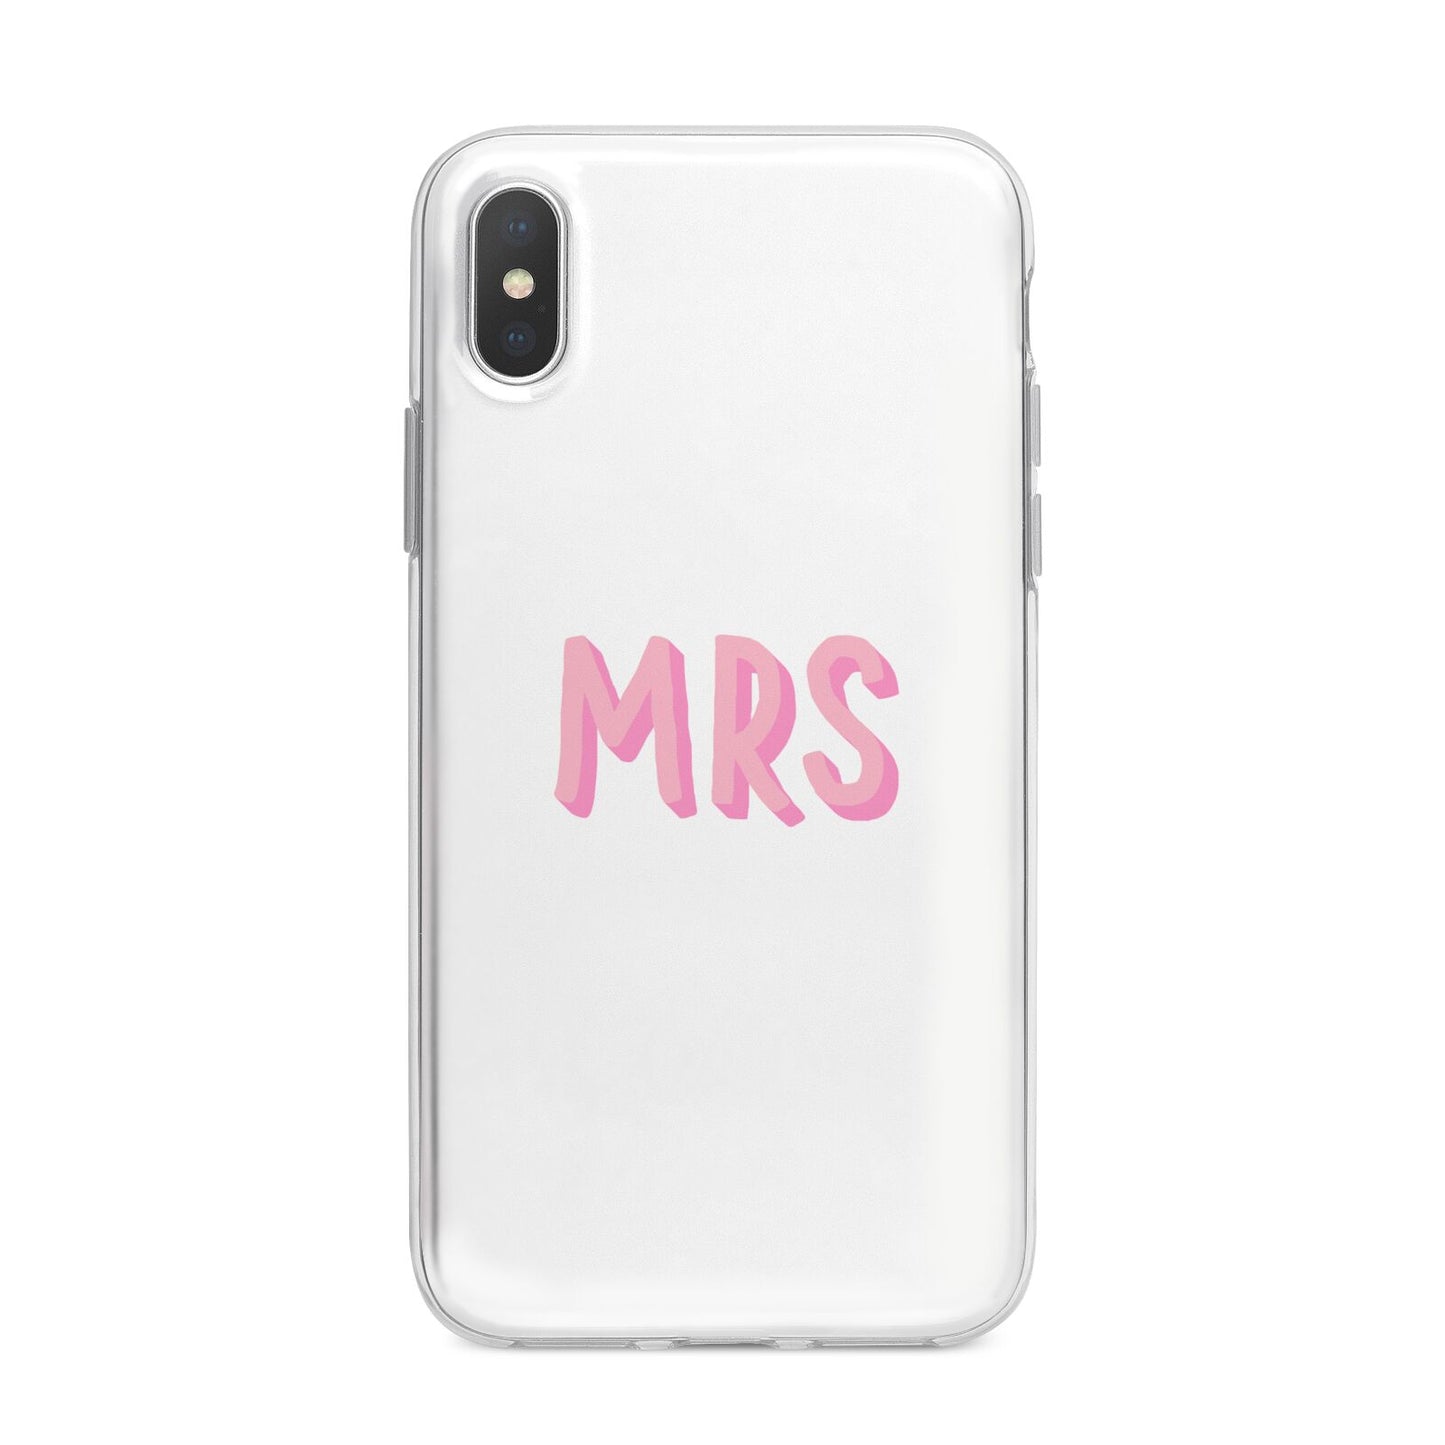 Mrs iPhone X Bumper Case on Silver iPhone Alternative Image 1